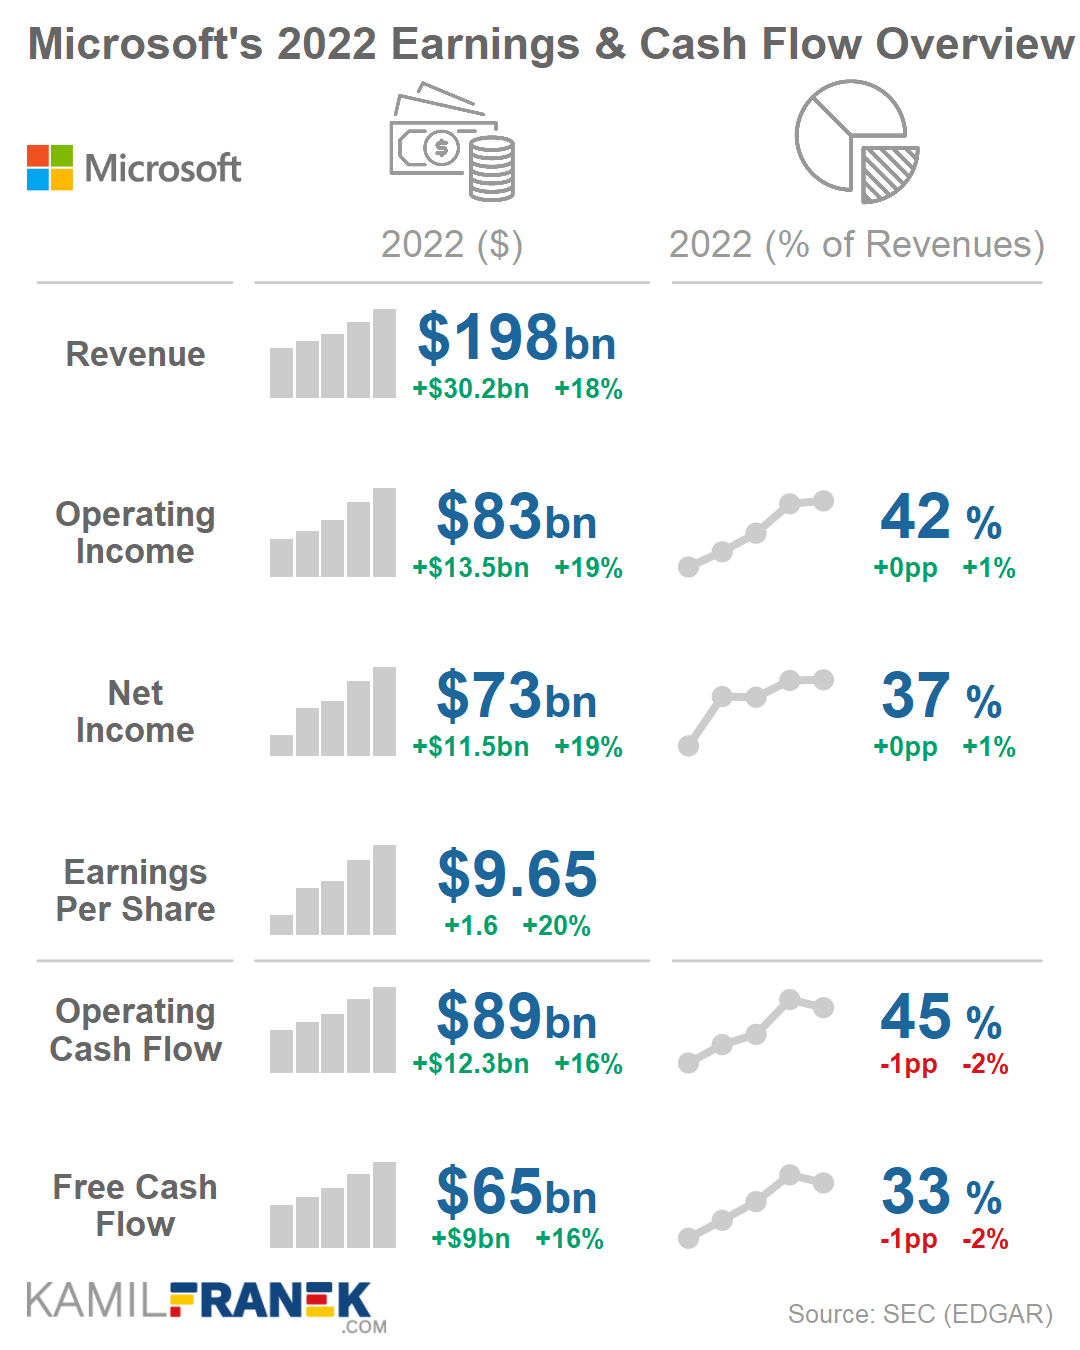 Microsoft key income statement and cashflow metrics summary